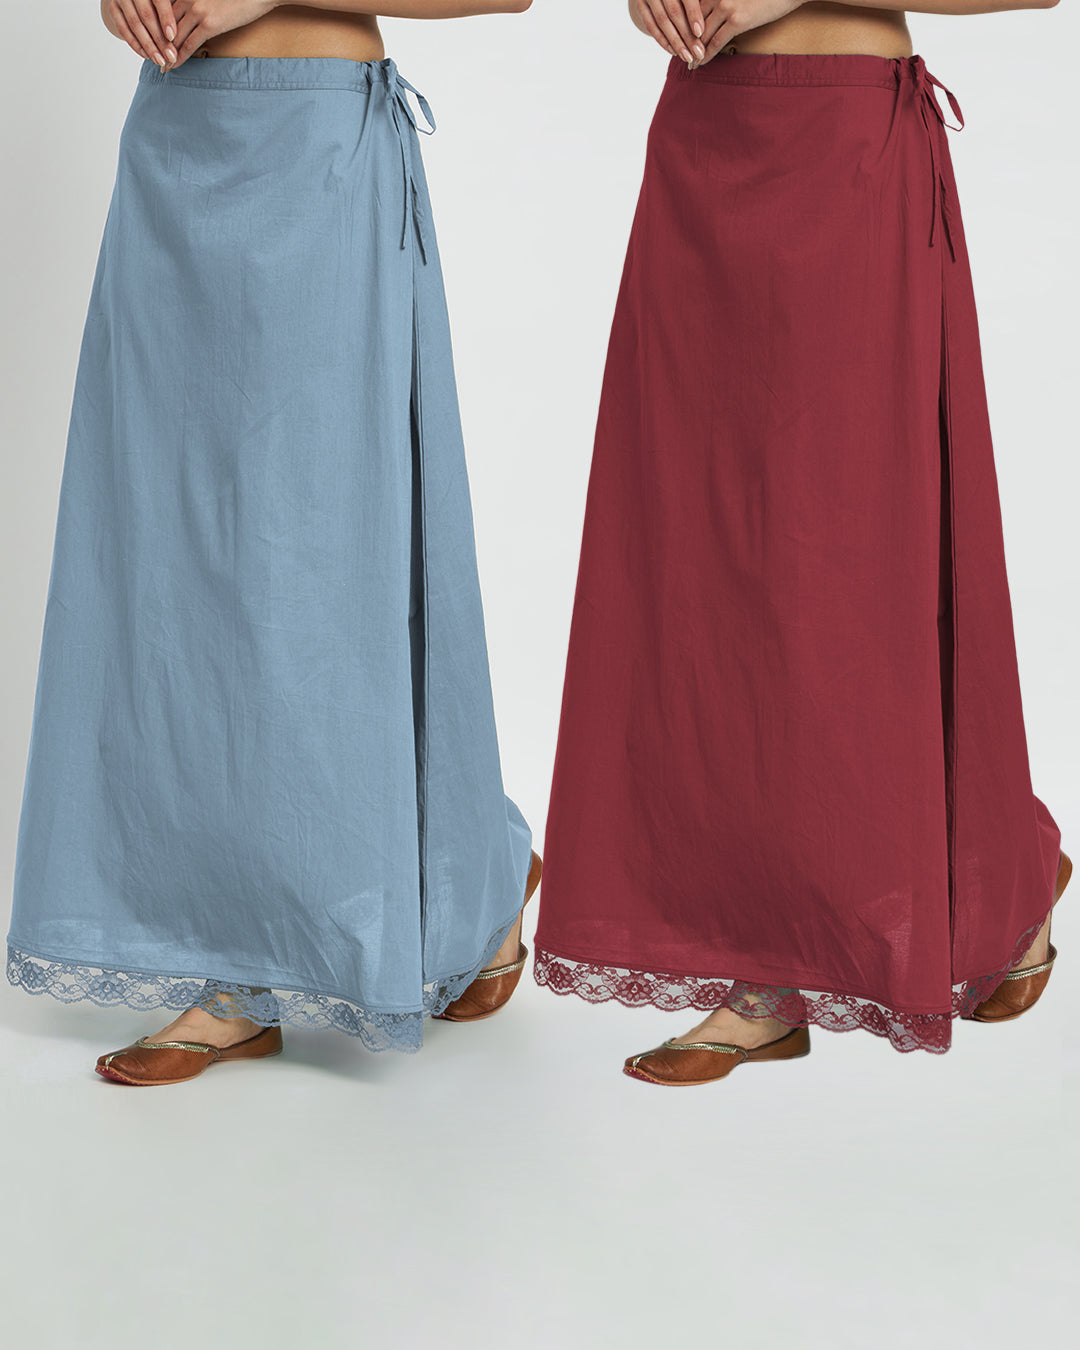 Combo: Blue Dawn & Russet Red Lace Medley Peekaboo Petticoat- Set of 2